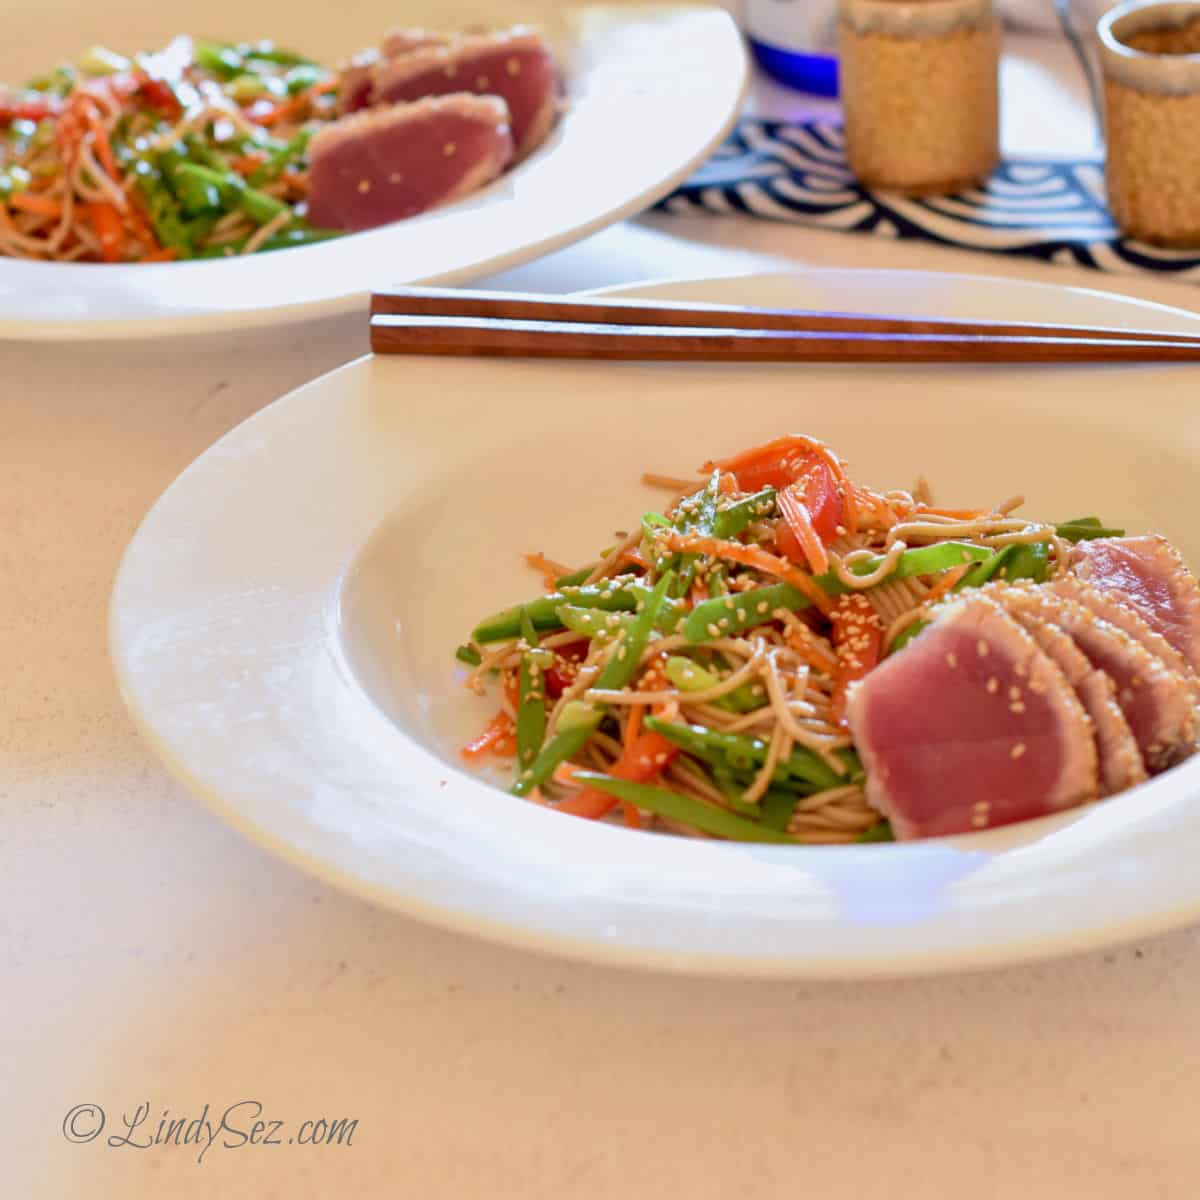 Seared Ahi Tuna with Soba Noodle salad with chop sticks and sake glassees.